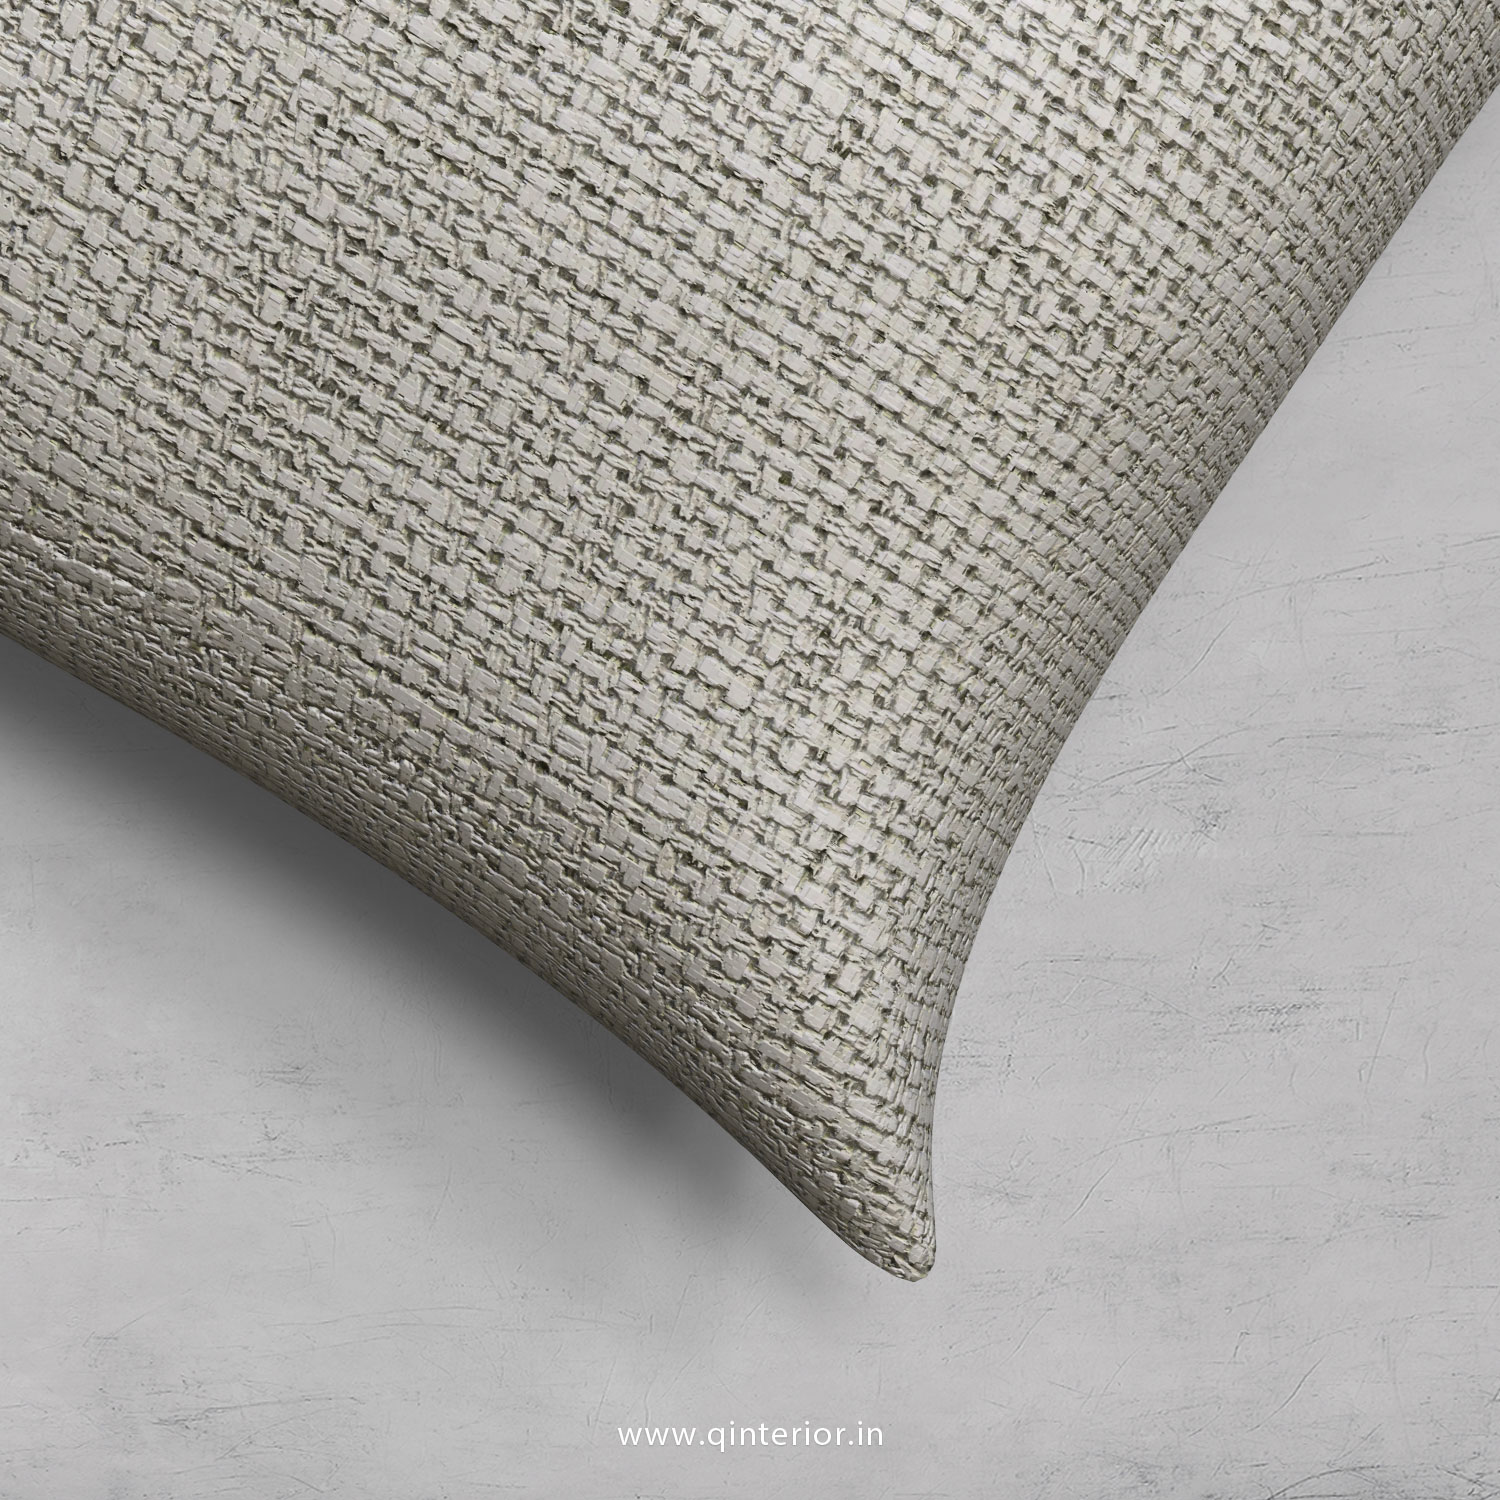 Cushion With Cushion Cover in Marvello- CUS001 MV05